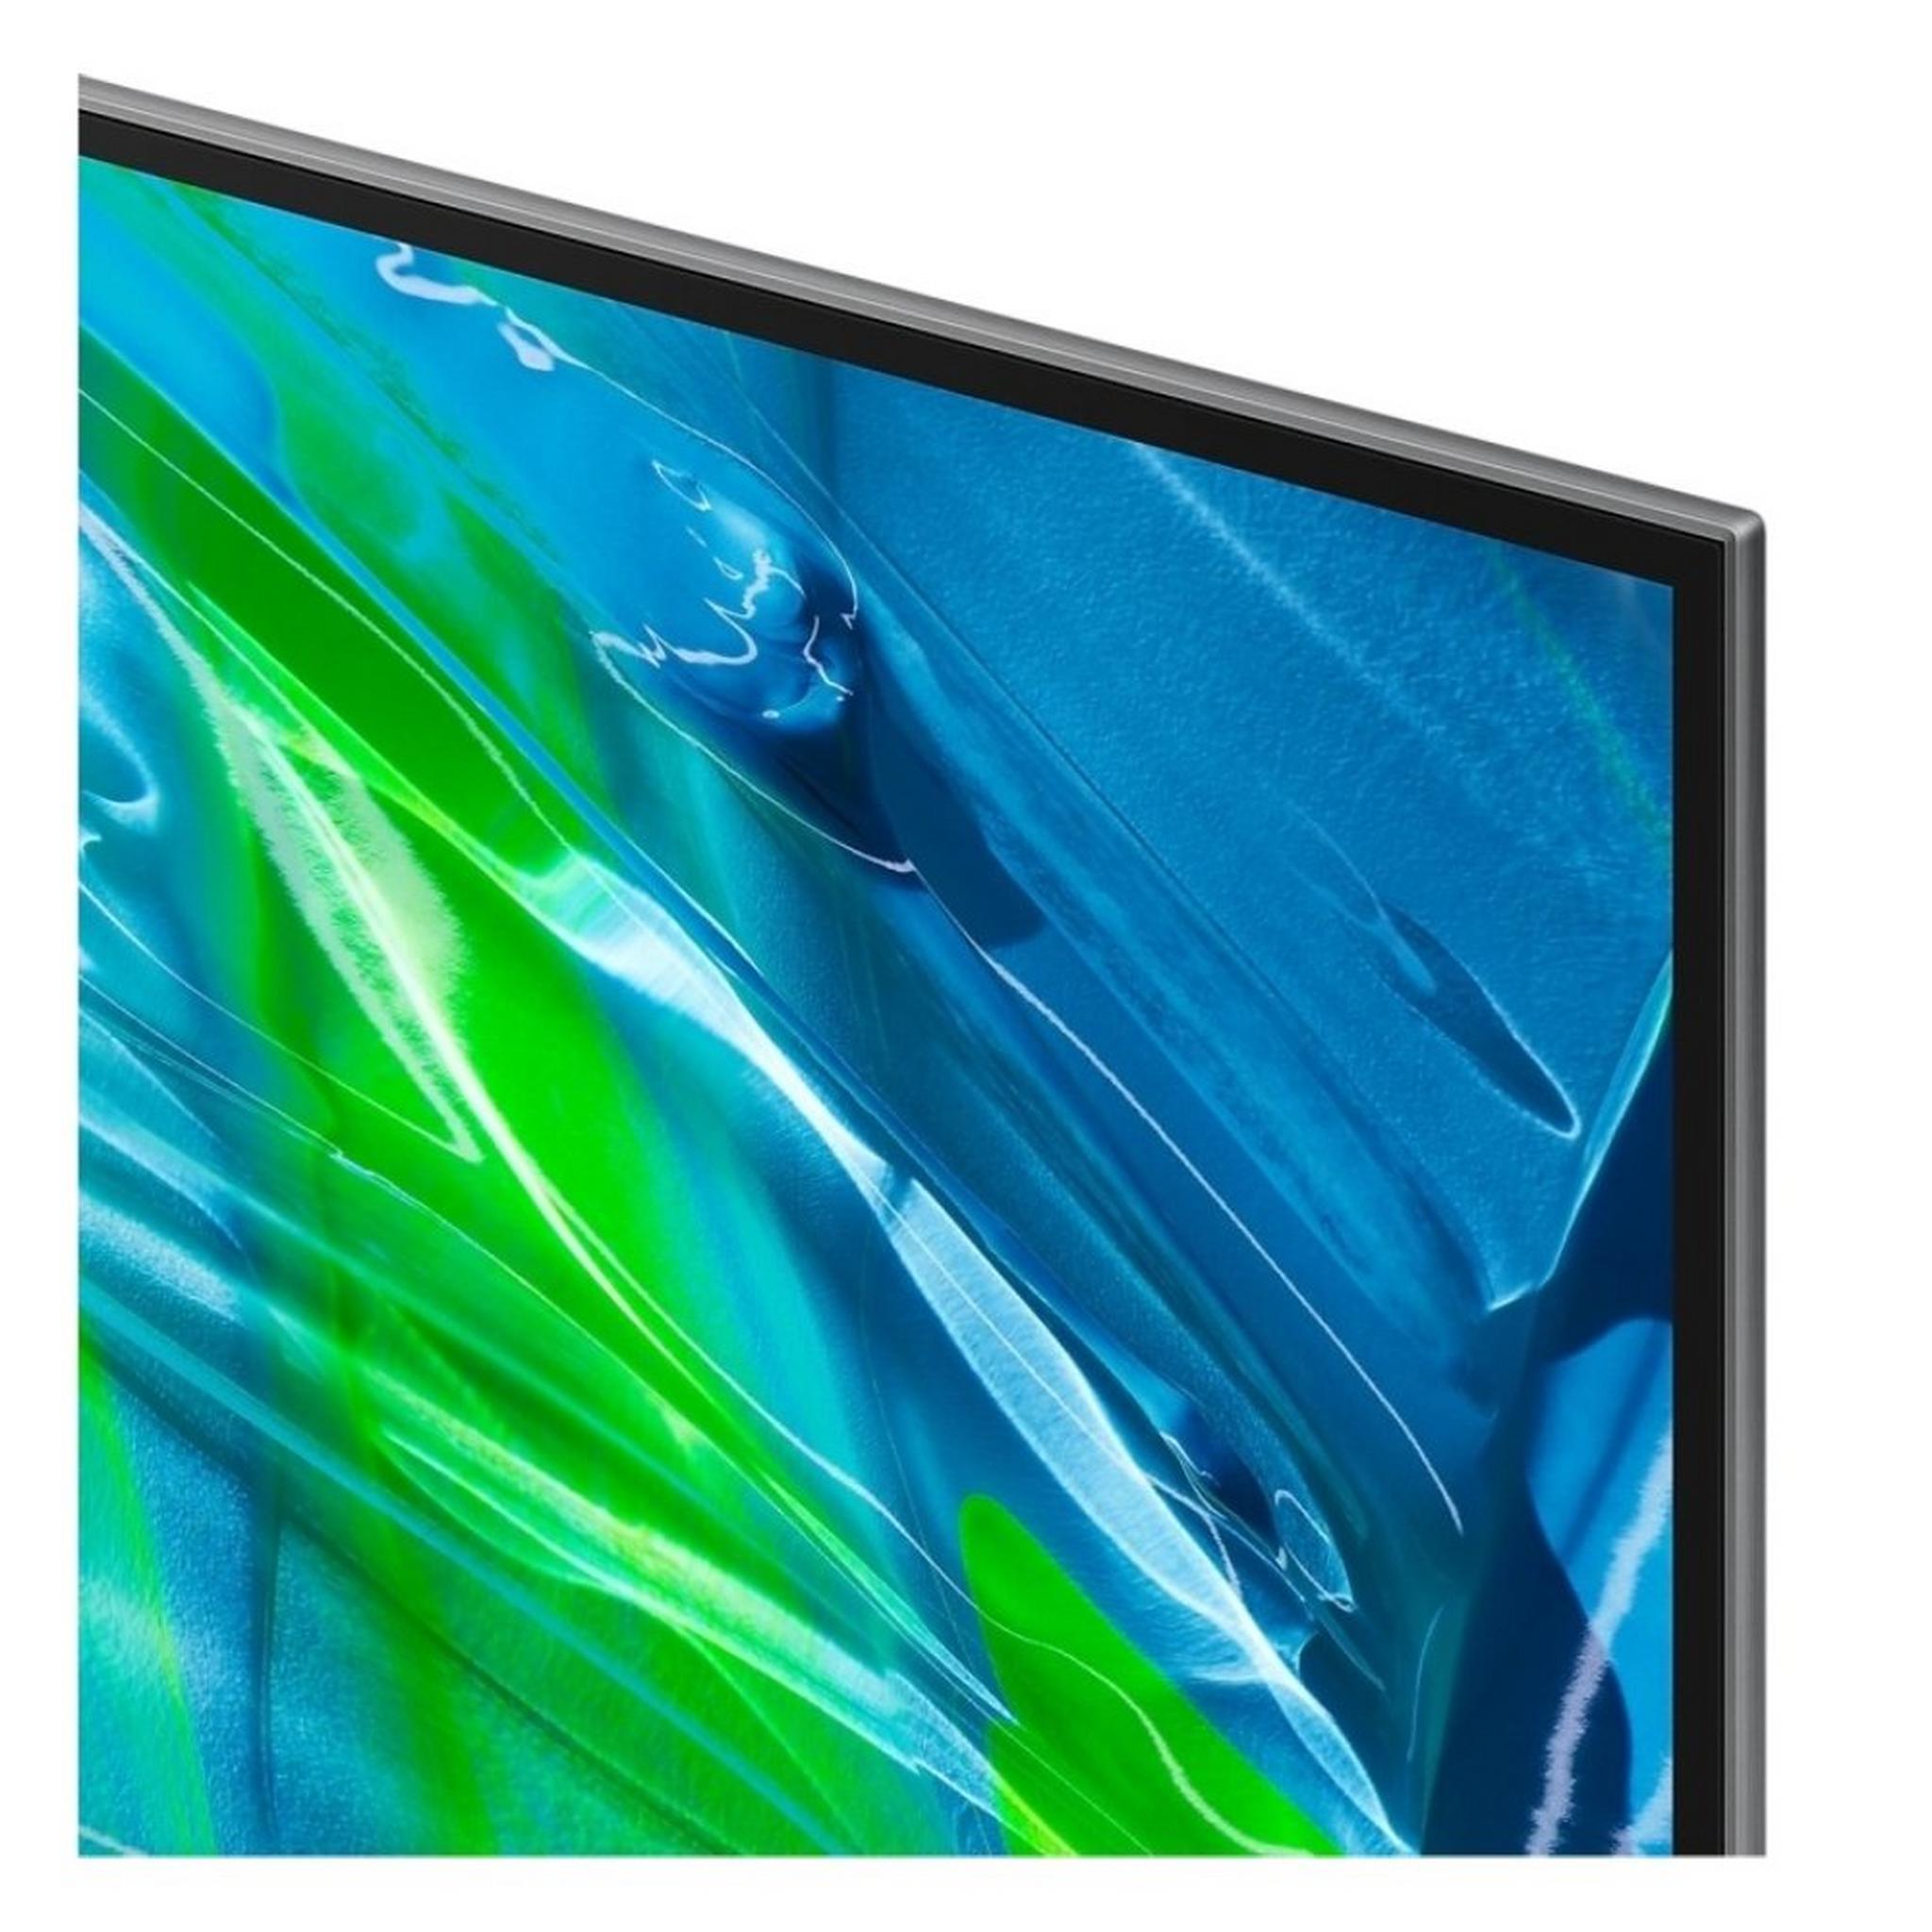 Samsung Smart TV OLED 65 Inch 4K (QA65S95BAUXSA)